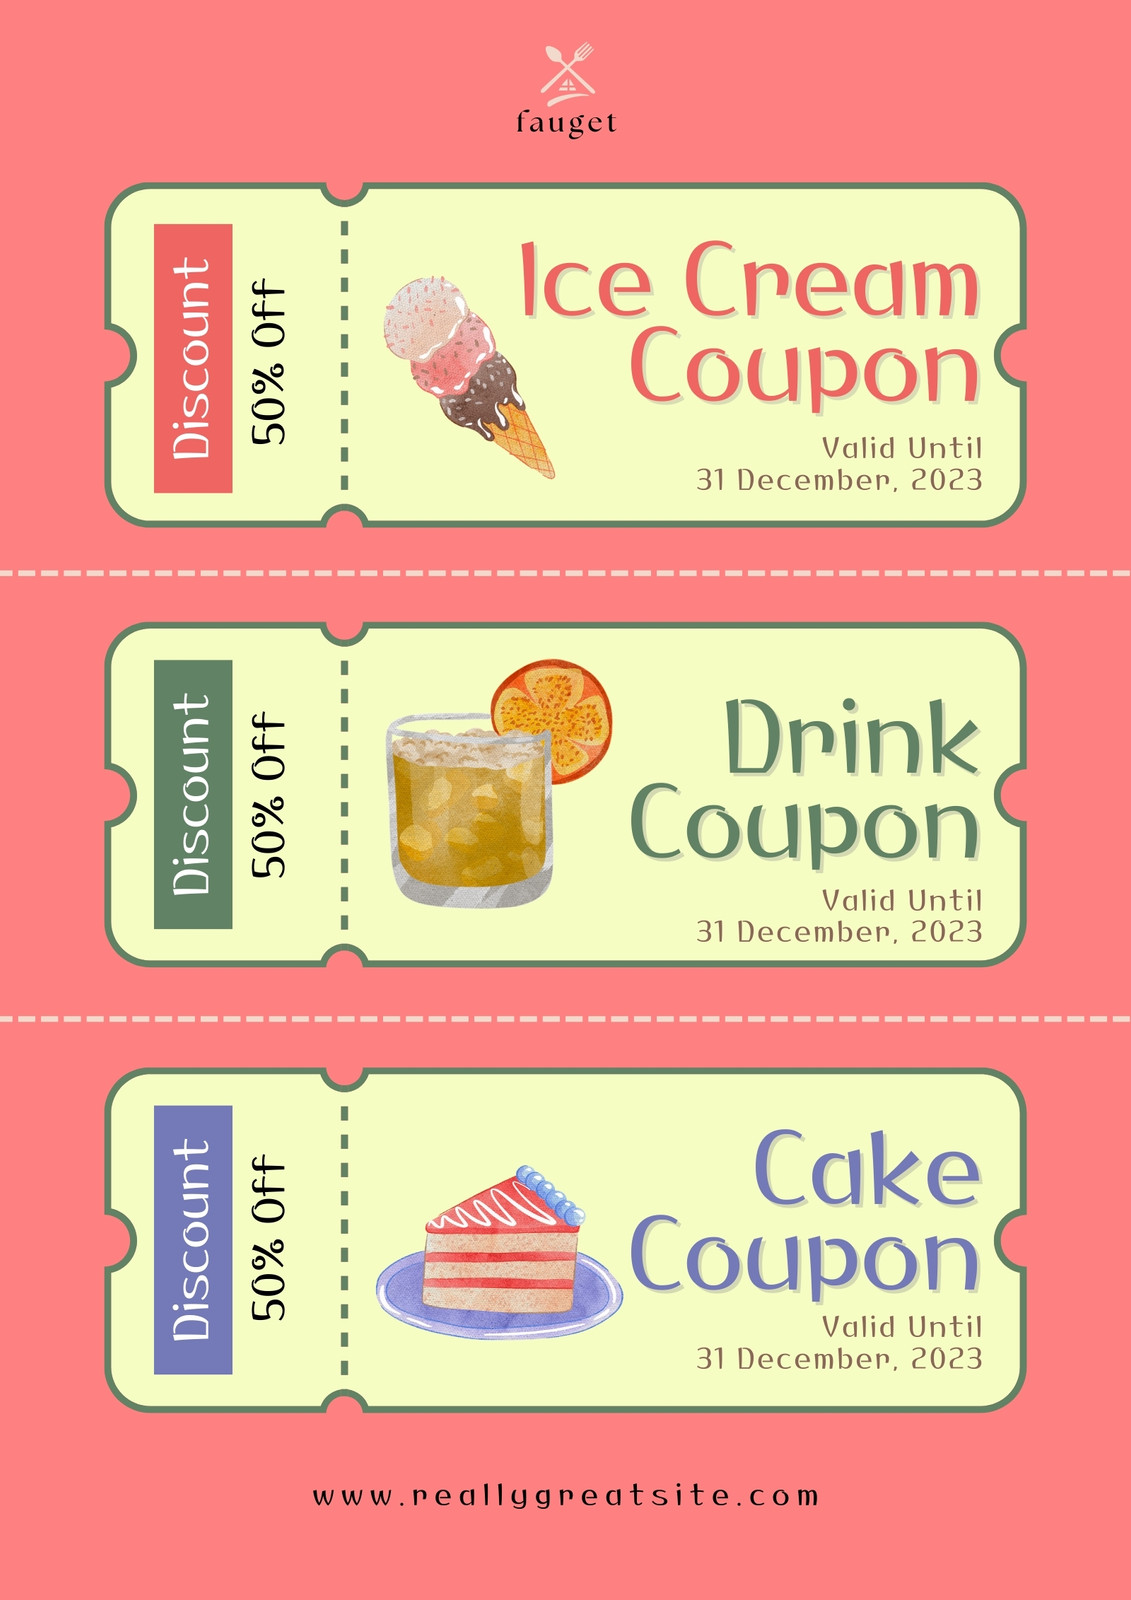 https://marketplace.canva.com/EAFxsbB8Te4/1/0/1131w/canva-pink-and-beige-playful-illustrative-food-beverage-coupon-VKyH5U0gVxg.jpg